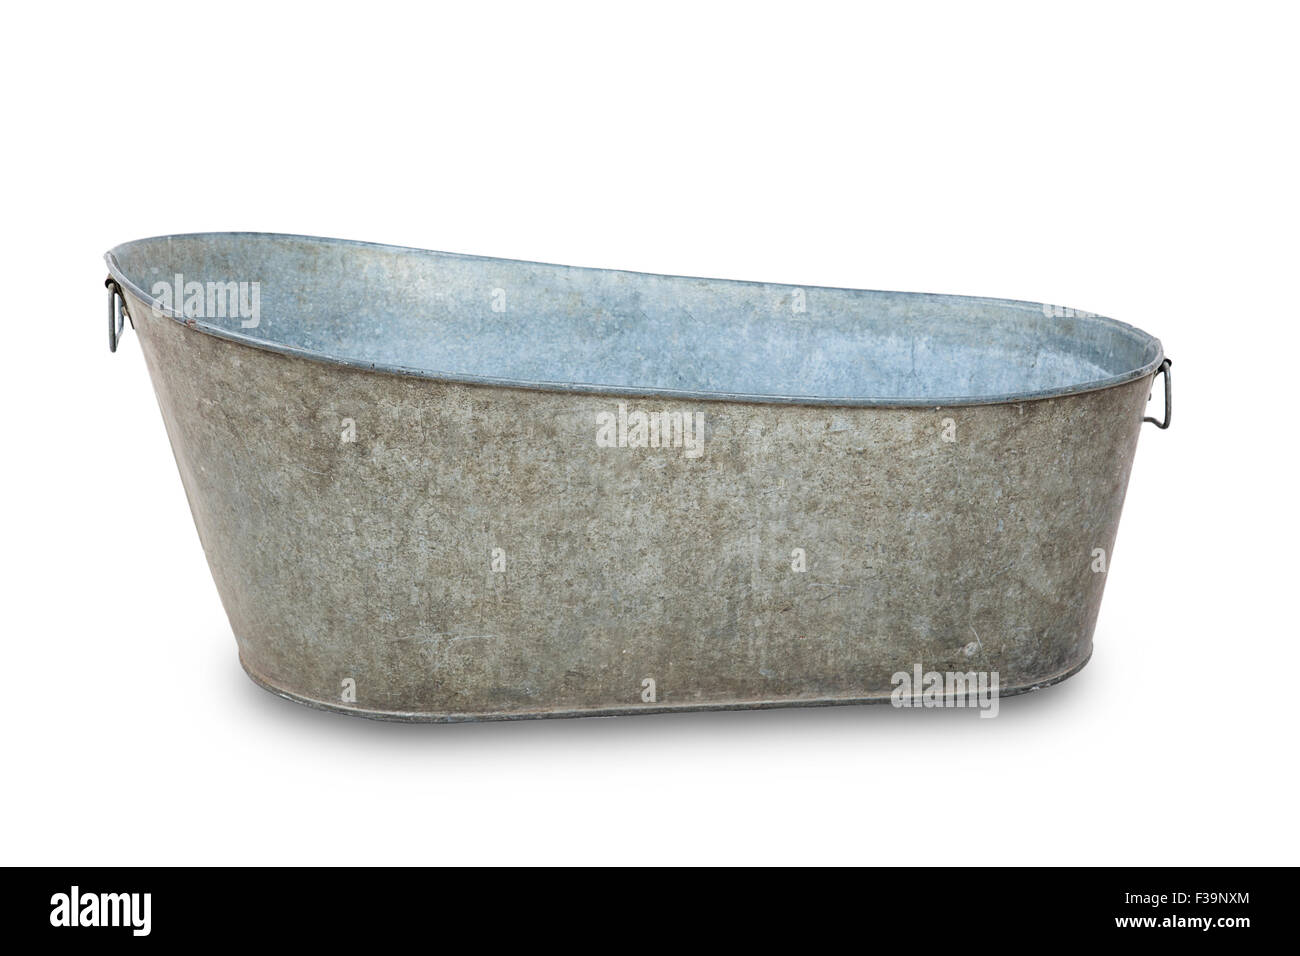 Empty metal bathtube isolated on a white background Stock Photo